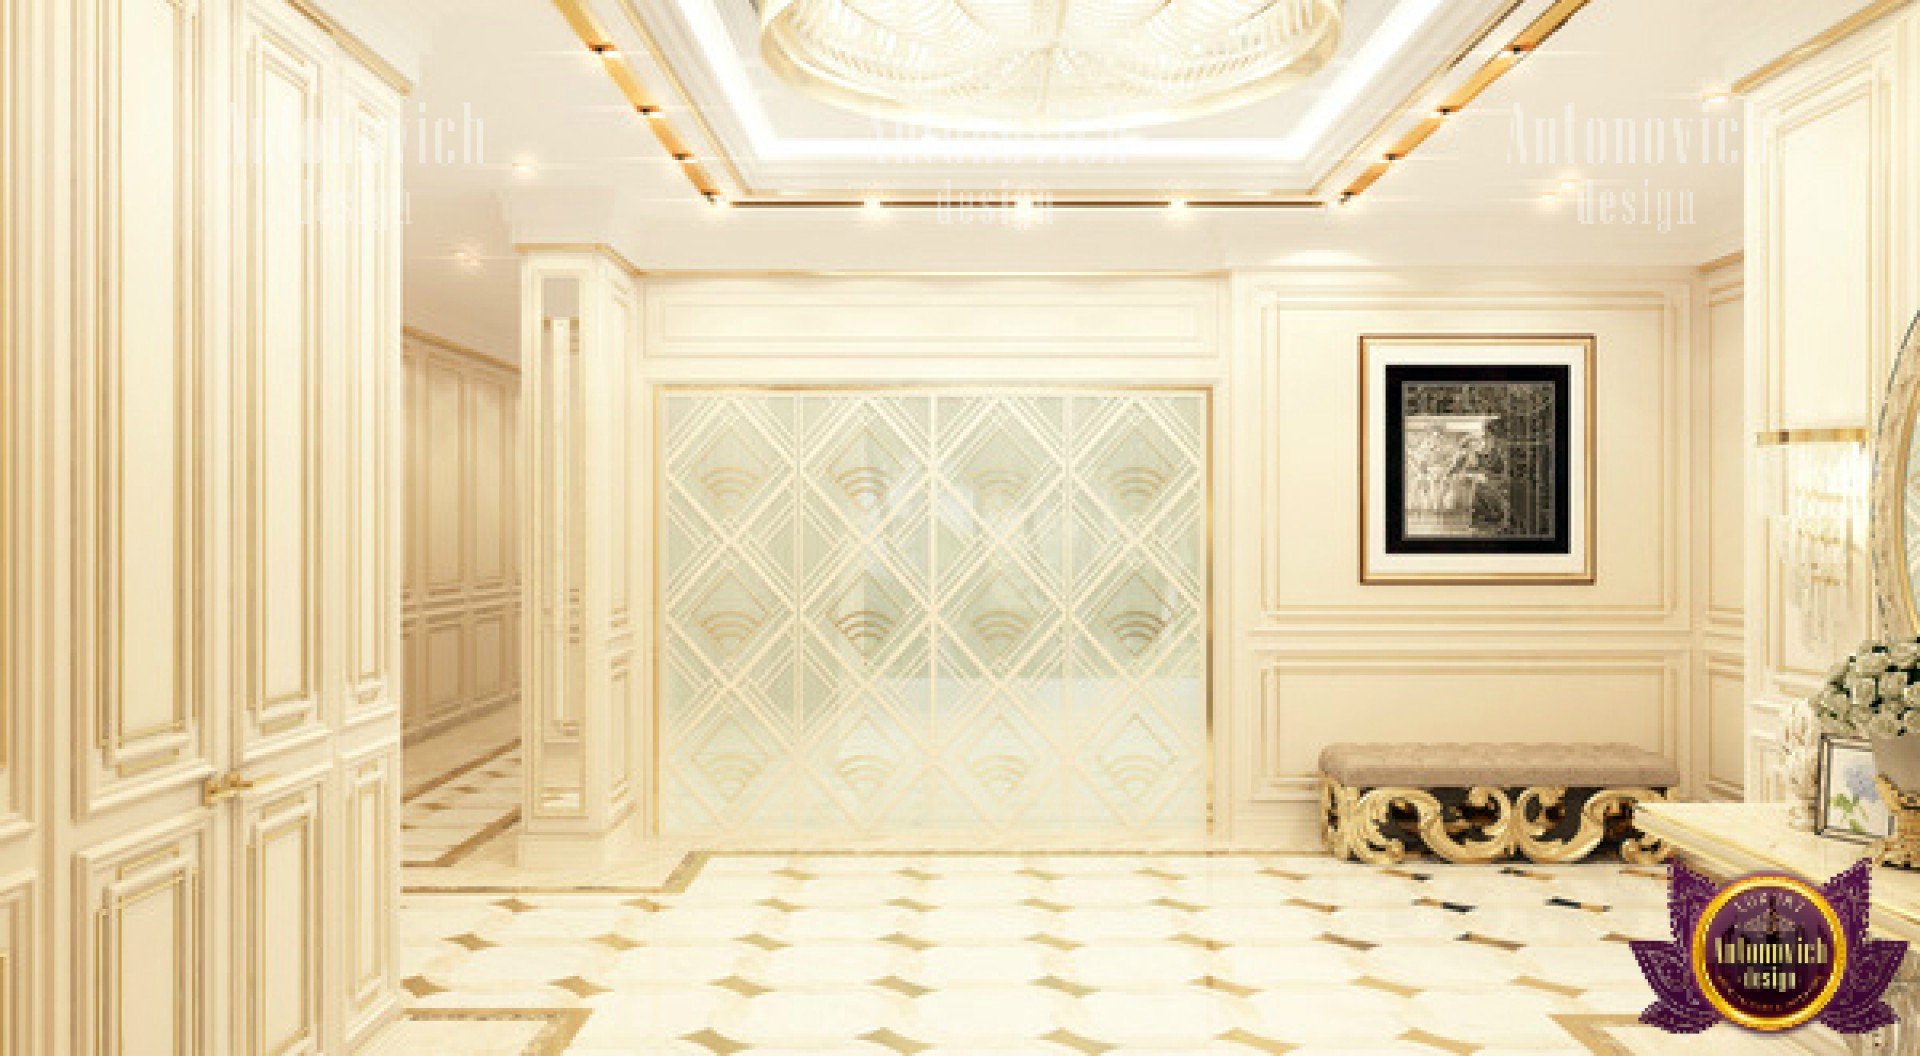 Opulent lobby interior showcasing a stunning staircase and lavish furnishings